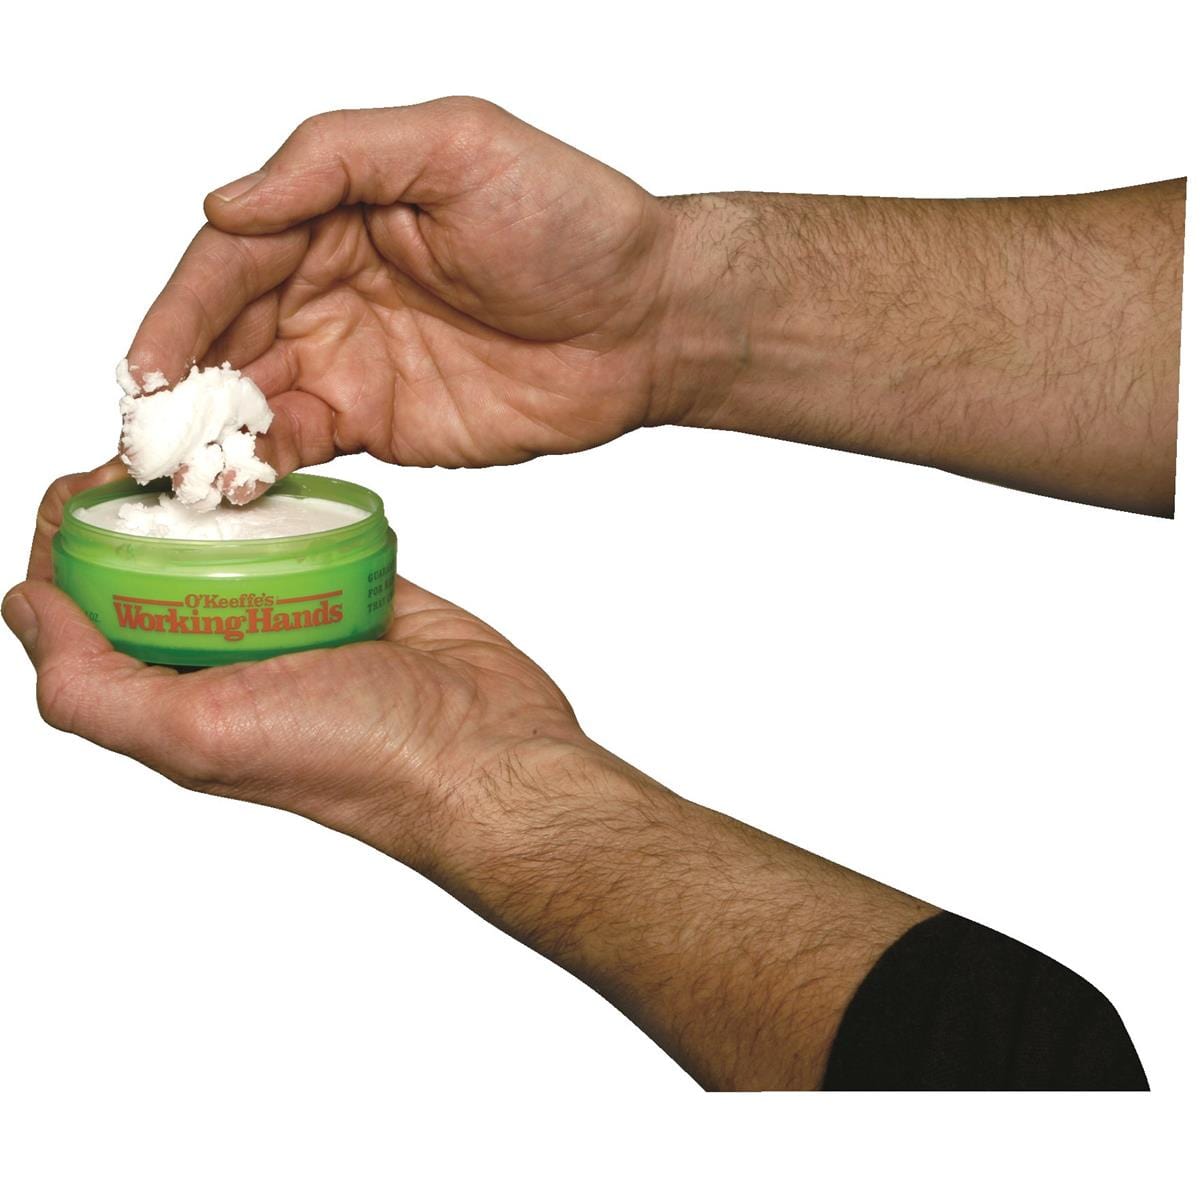 O'Keeffe's Working Hands Cream, 3.4-oz. Tub